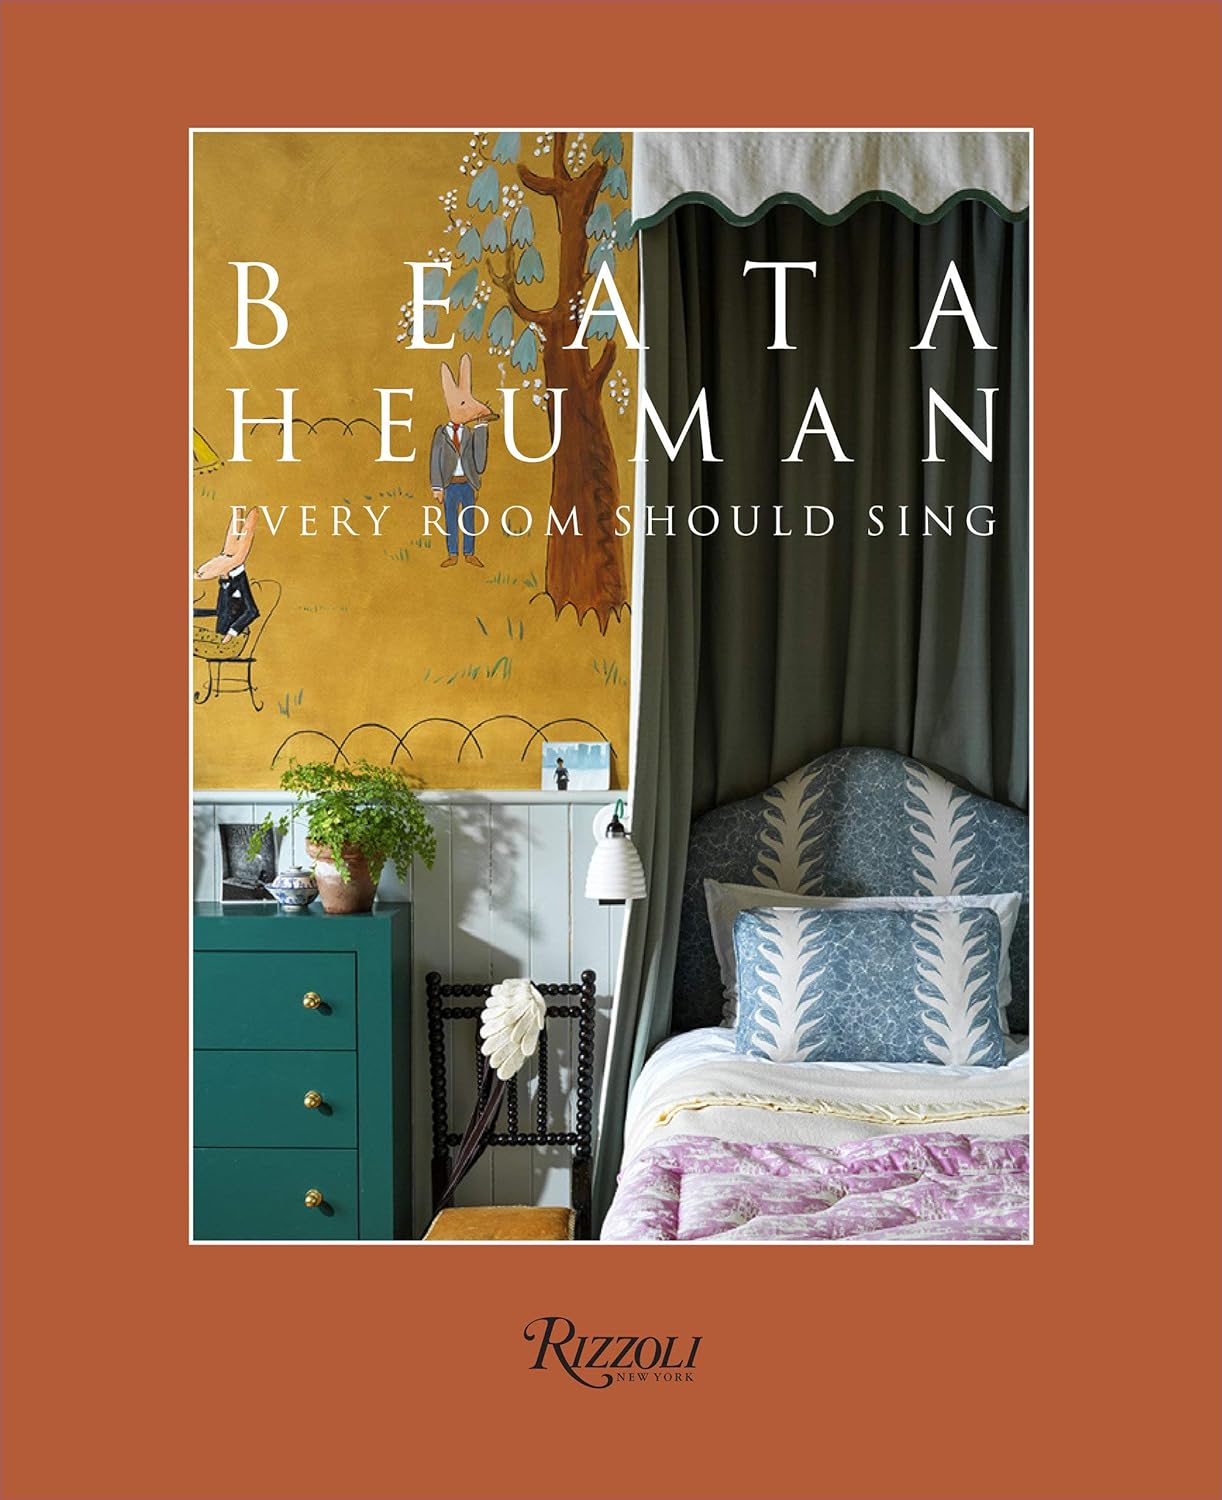 BEATA HEUMAN: Every Room Should Sing (Rizzoli, 2021) book cover. #beataheuman